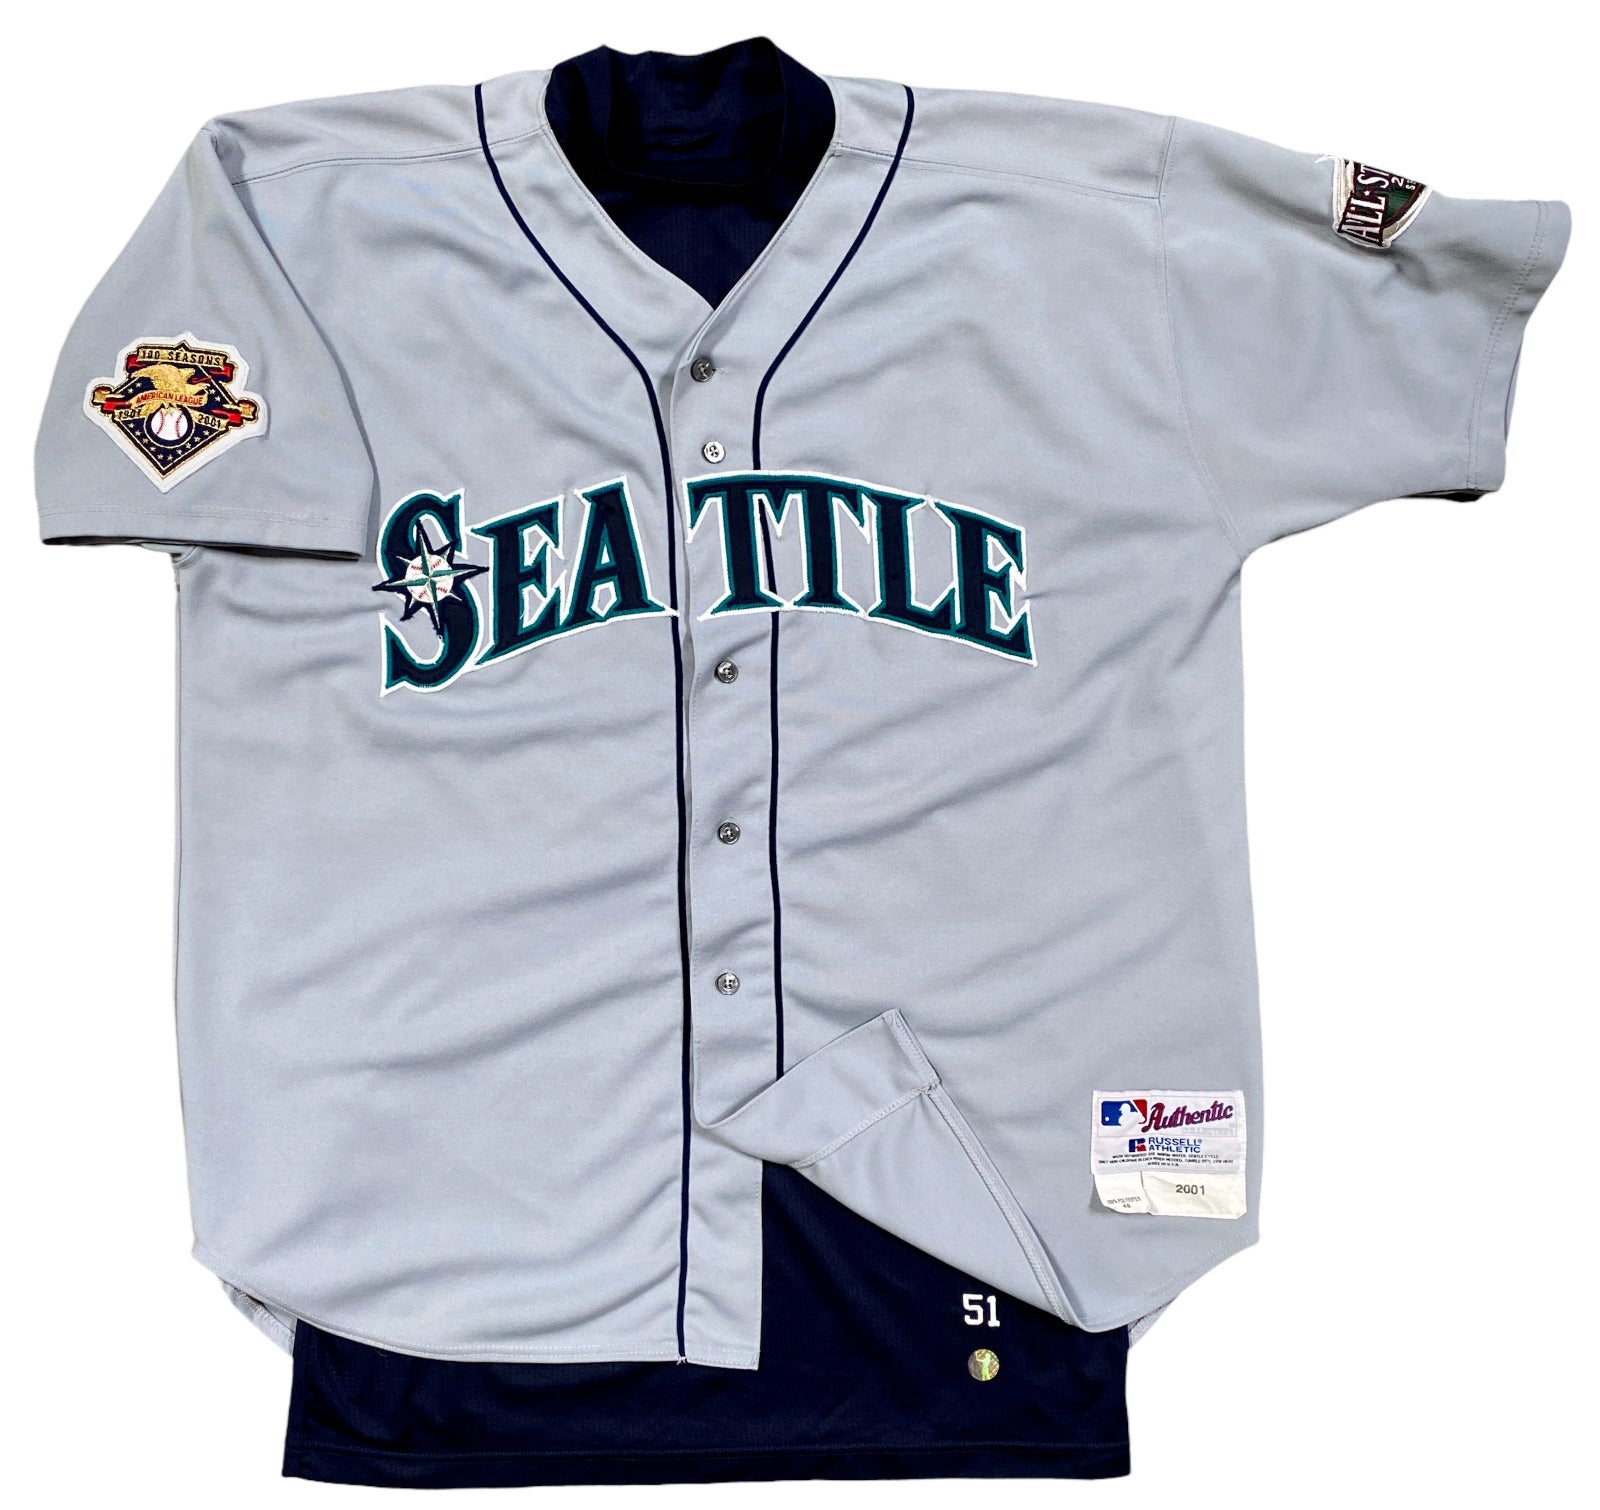 Seattle Mariners Ichiro 2001 Batting Practice Jersey – Simply Seattle